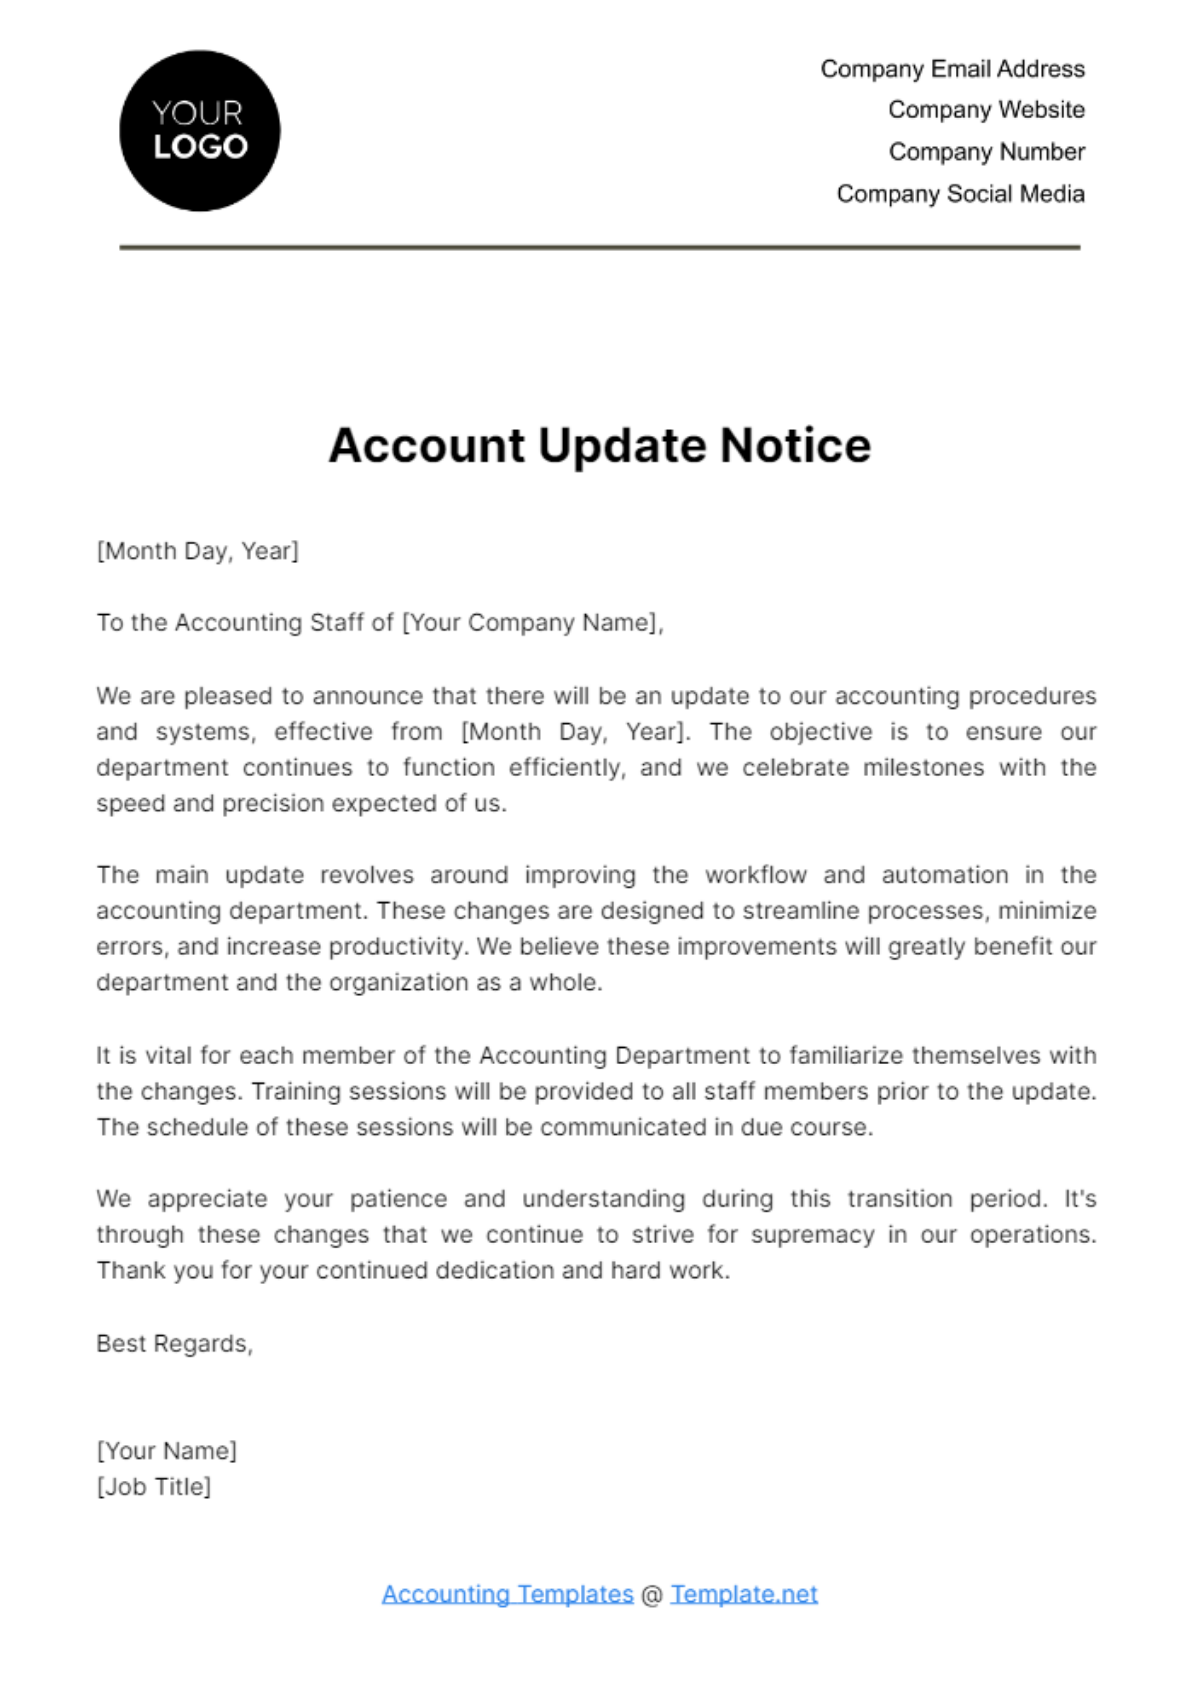 Account Update Notice Template